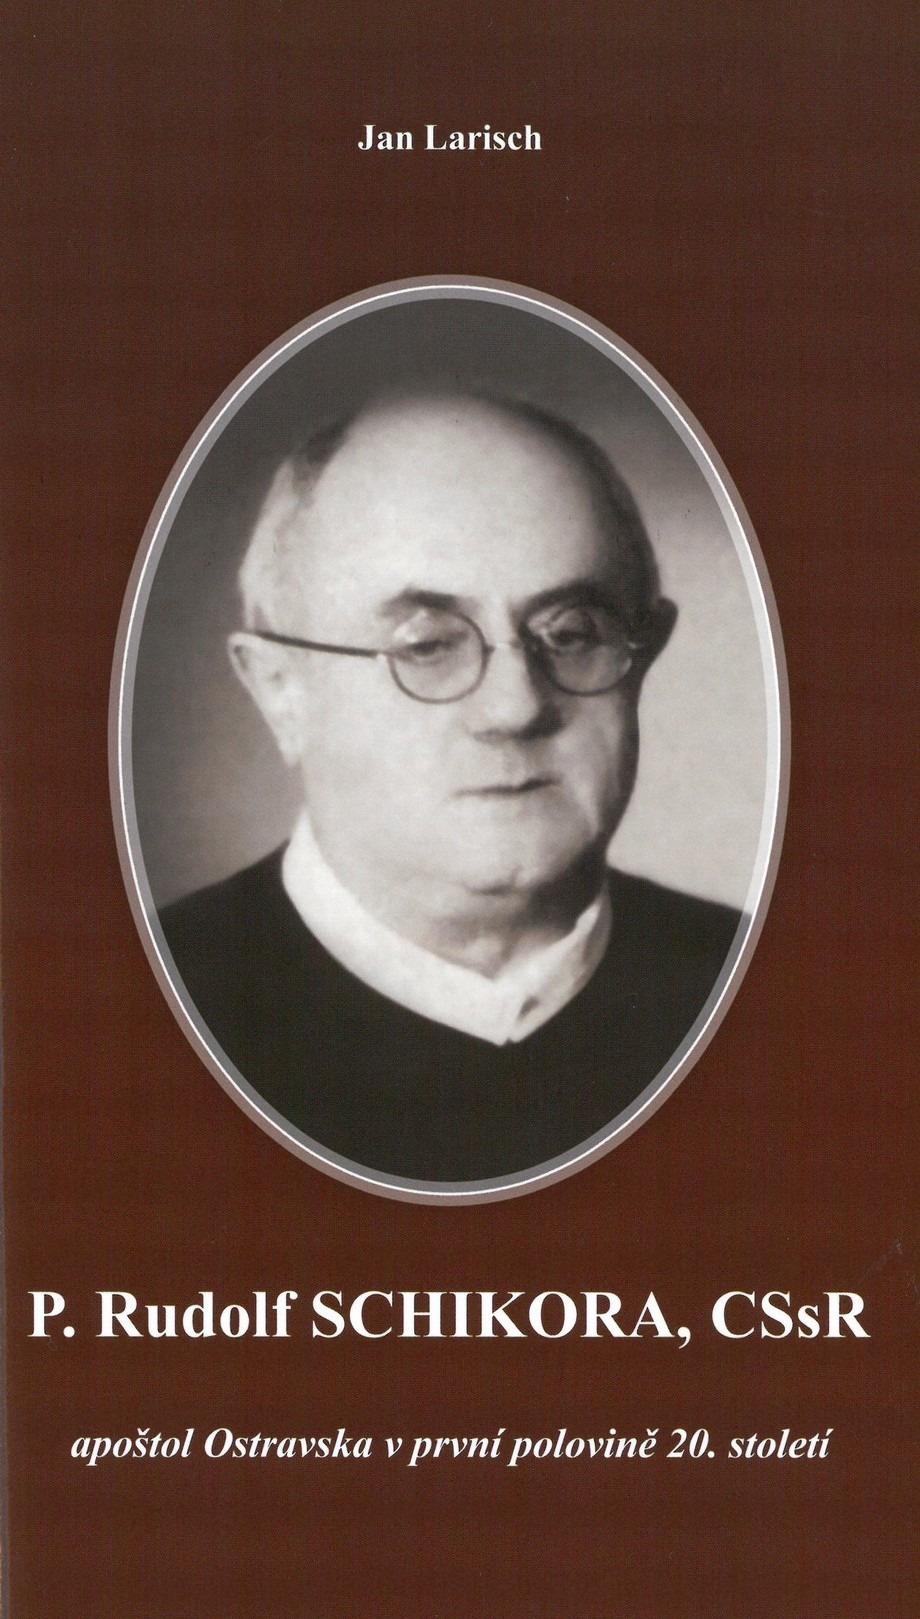 P. Rudolf Schikora, CSsR